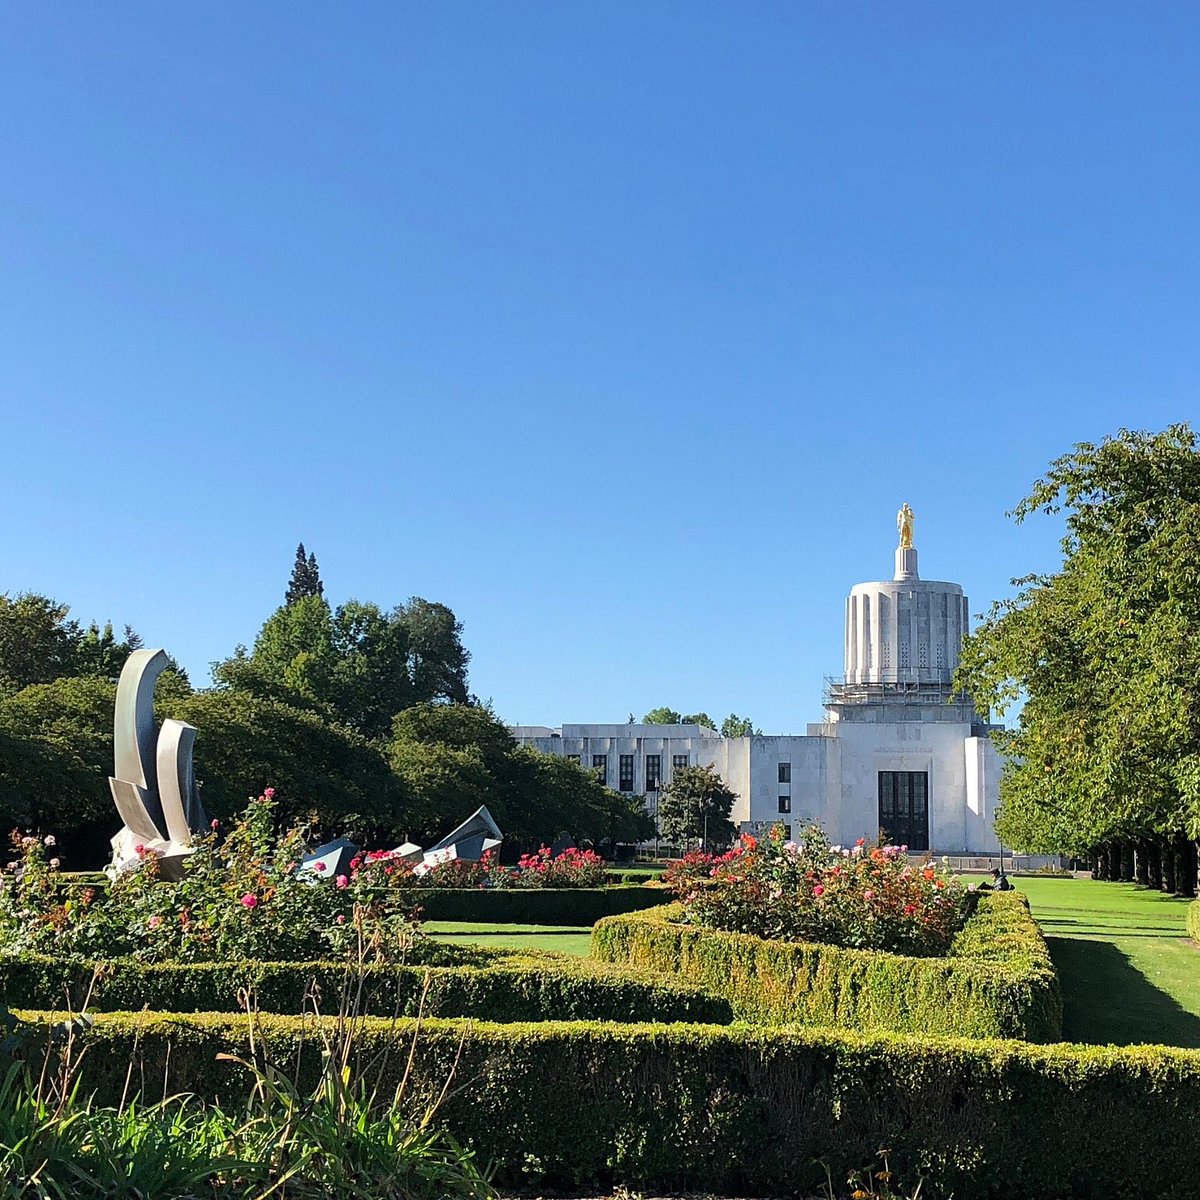 Oregon State Capitol Rotunda Dome in Salem, Oregon